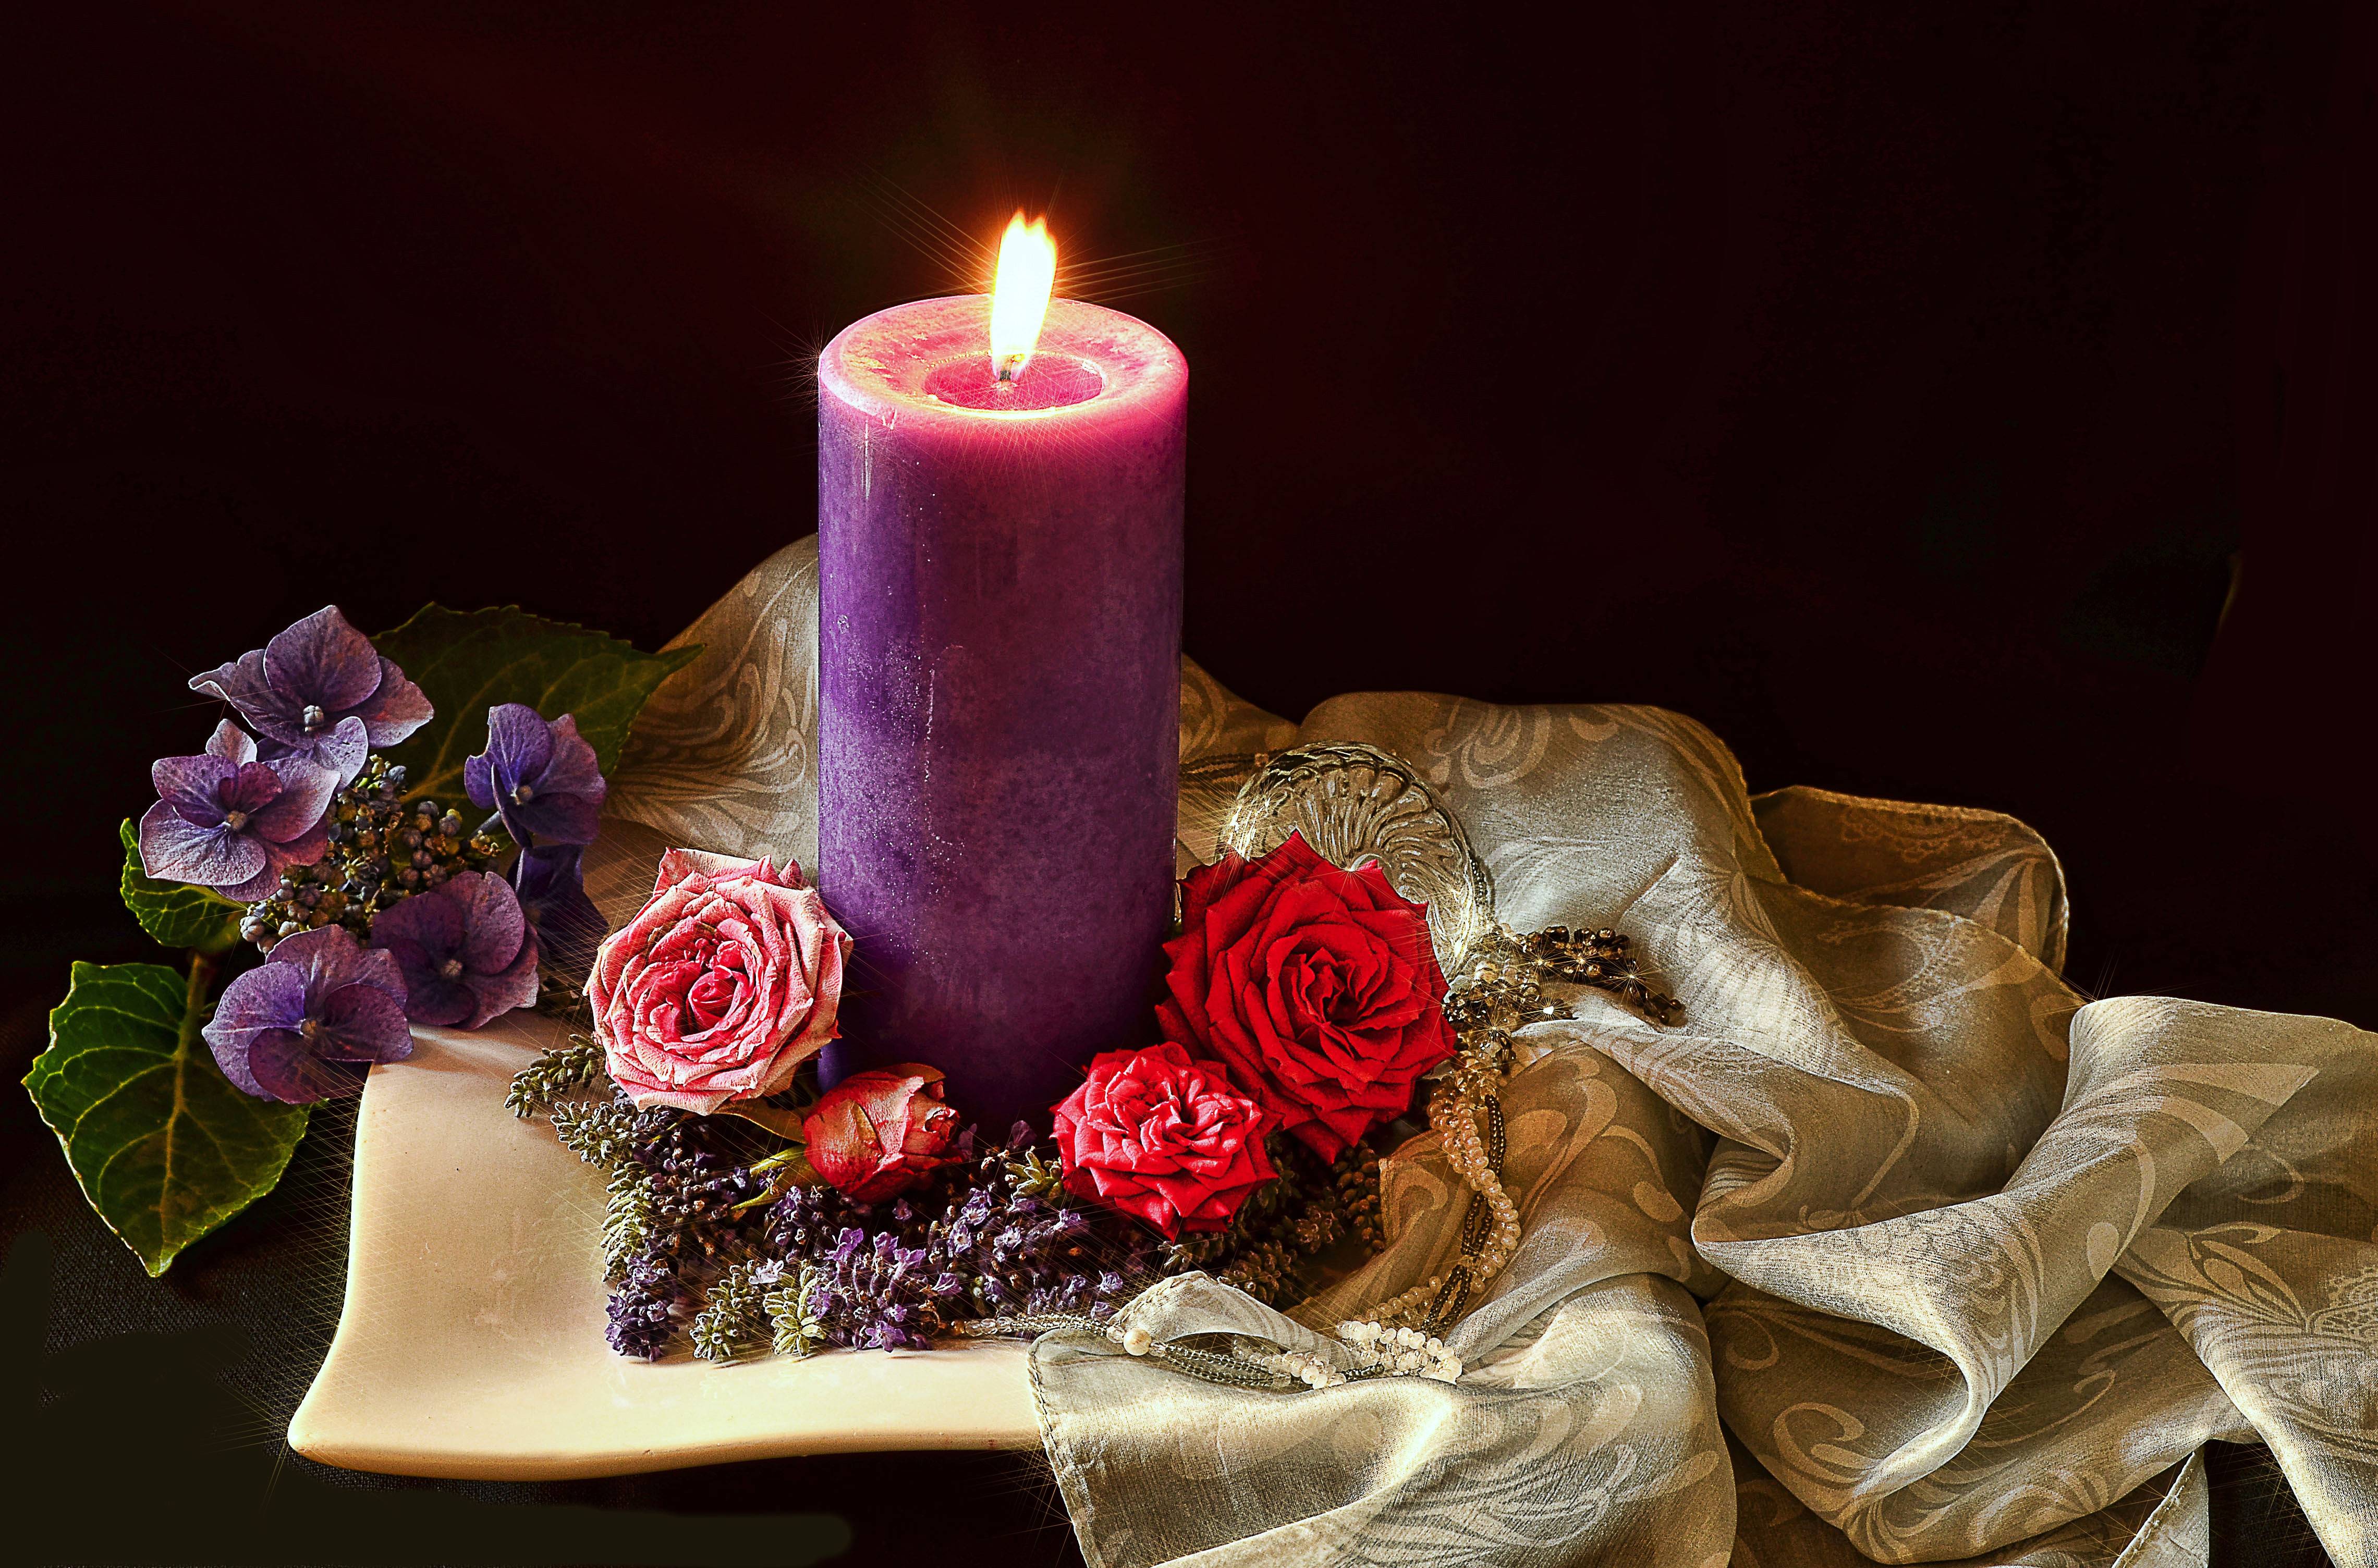 Картинка свечи. Красивые свечи. Свечи и цветы. Волшебные свечи. Красивые горящие свечи.